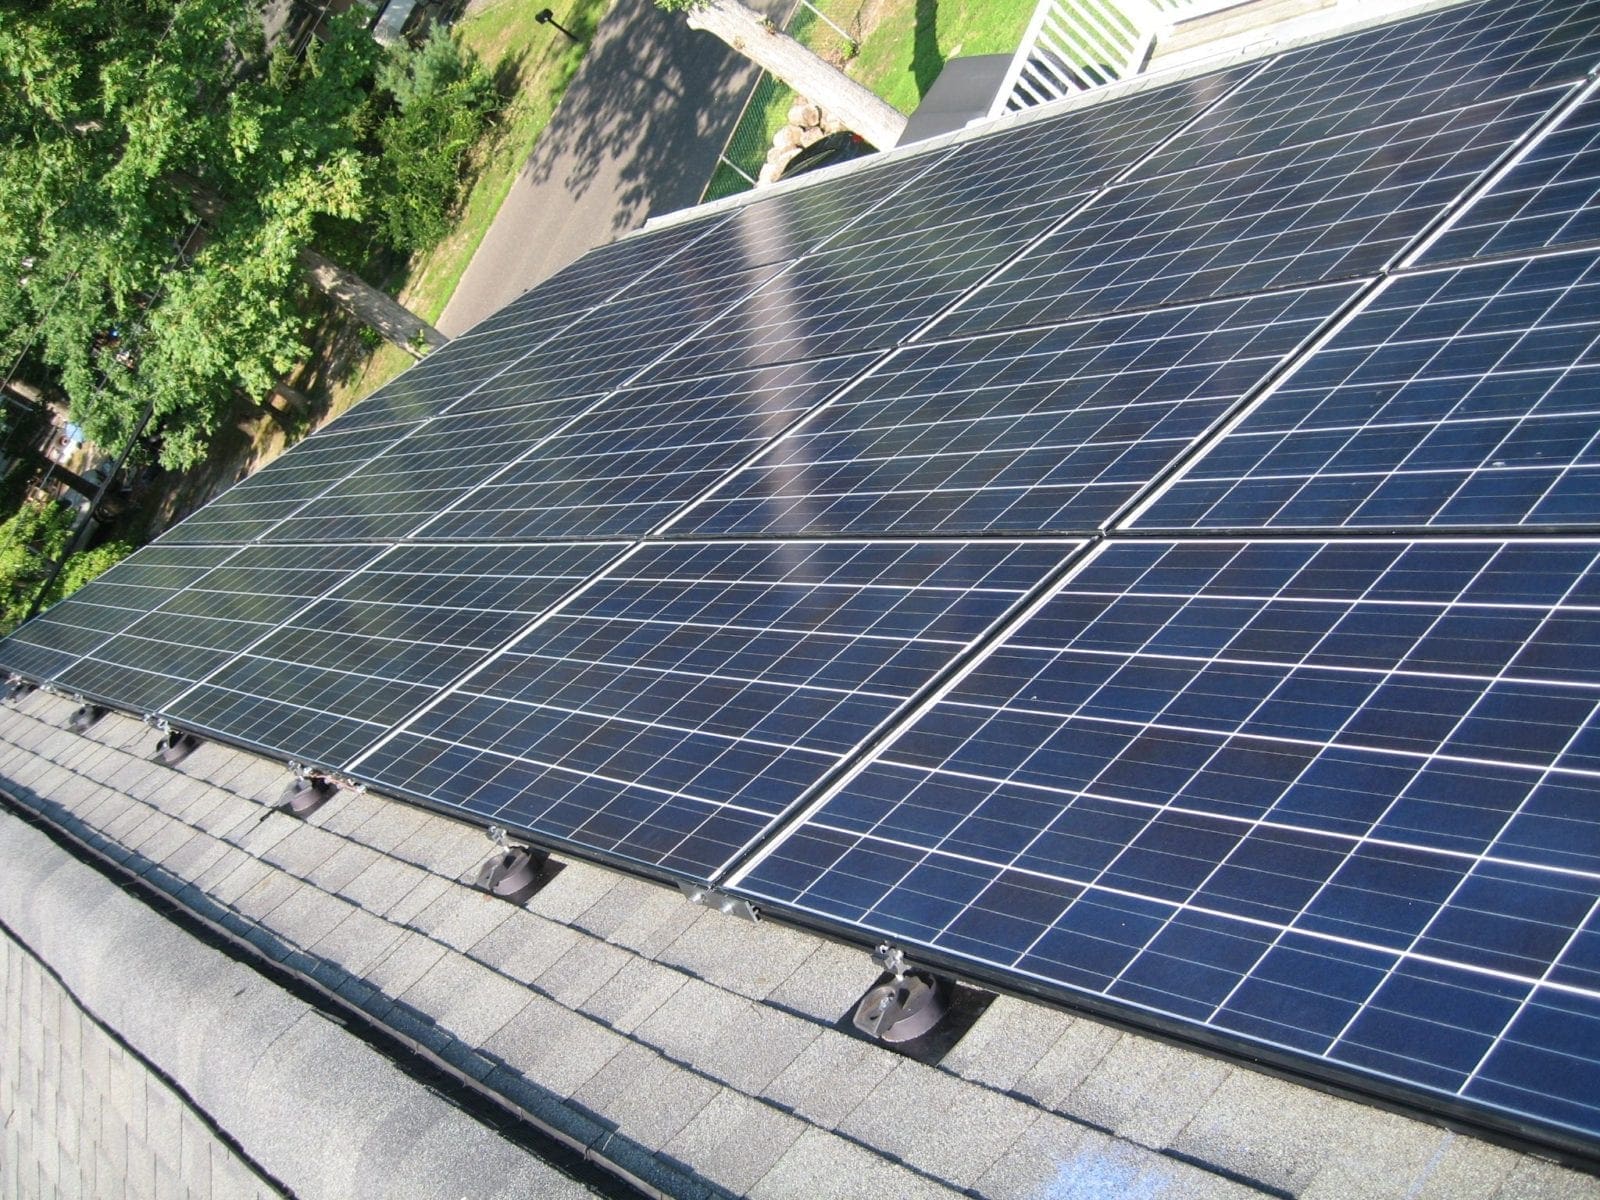 nj-solar-panels-in-williamstown-green-sun-energy-services-732-410-7818